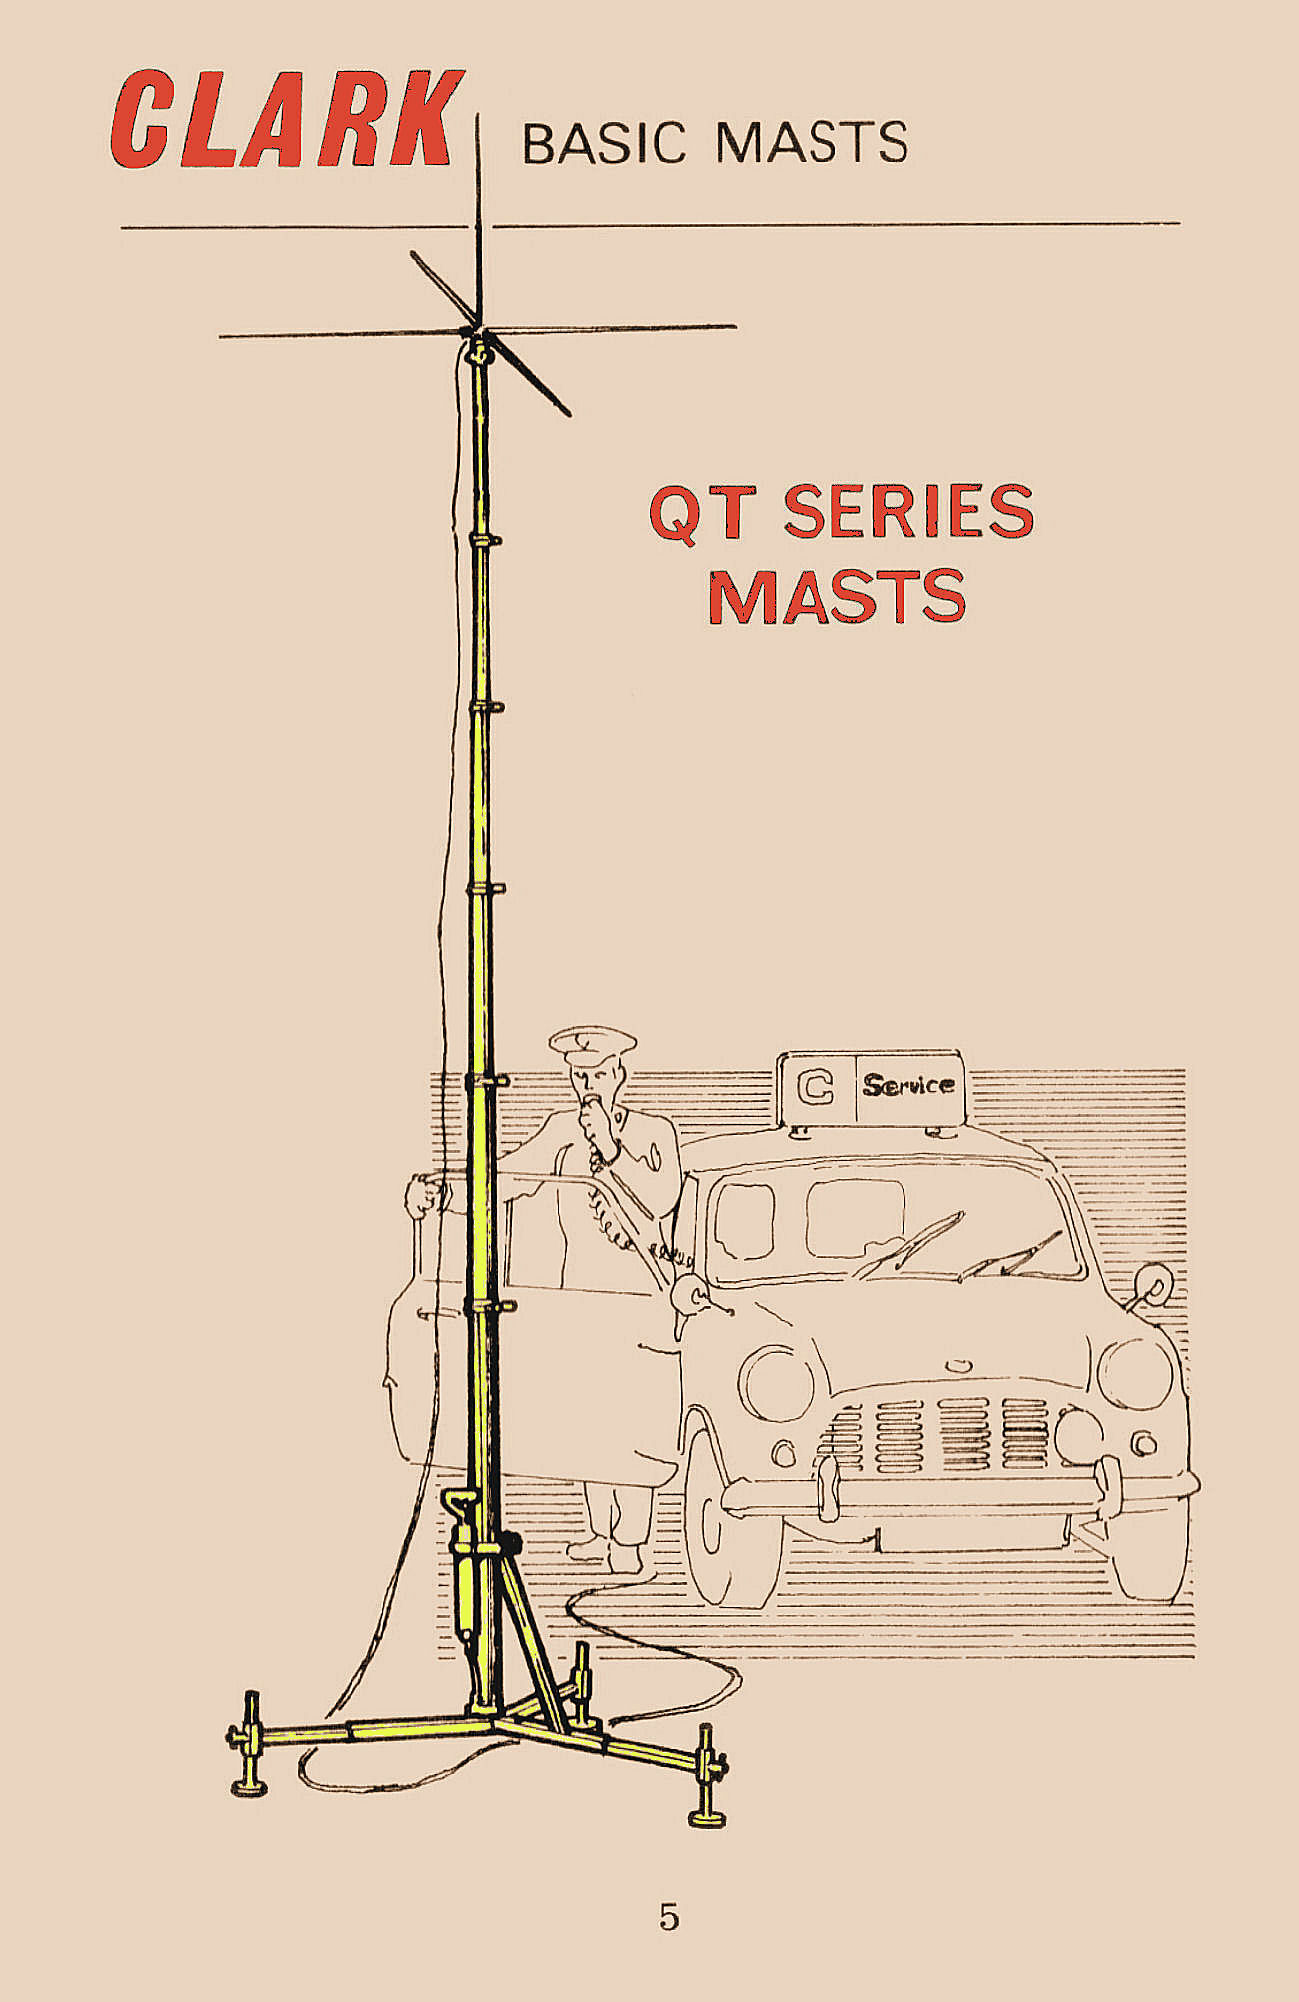 Clark Masts 1970's Catalogue - Page 5 QT - Series Masts